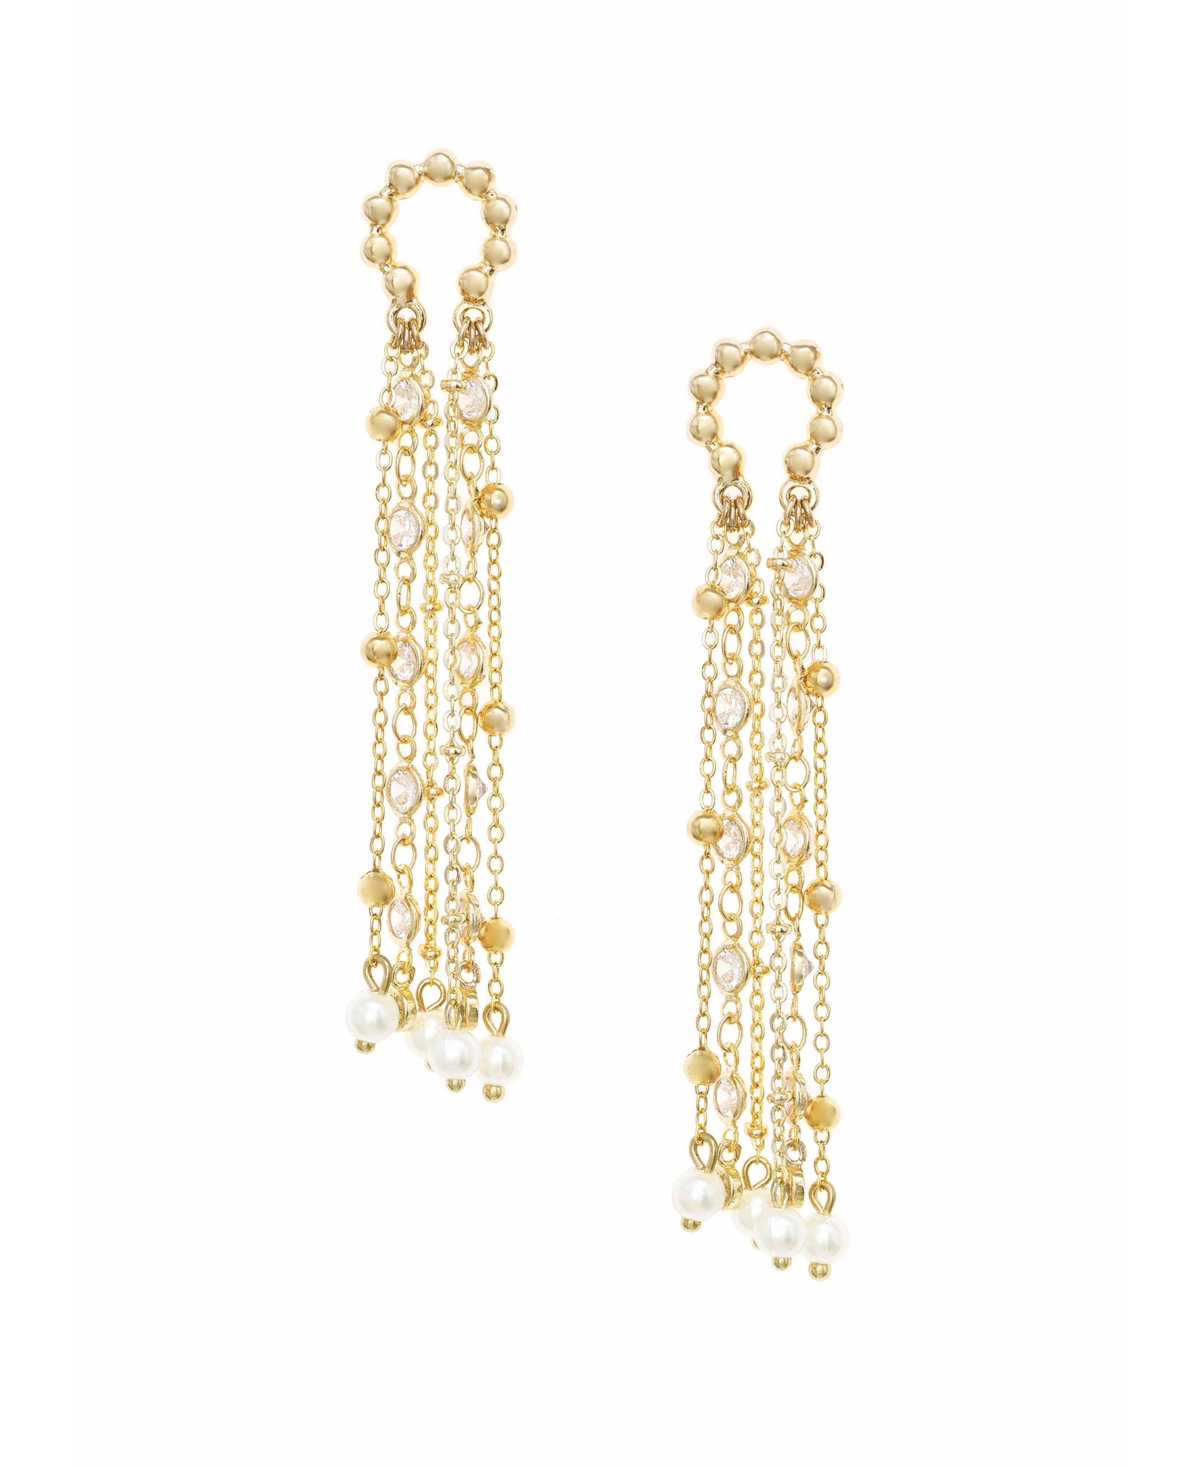 Ettika Imitation Pearly Gates Earrings In 18k Gold Plating In Yellow